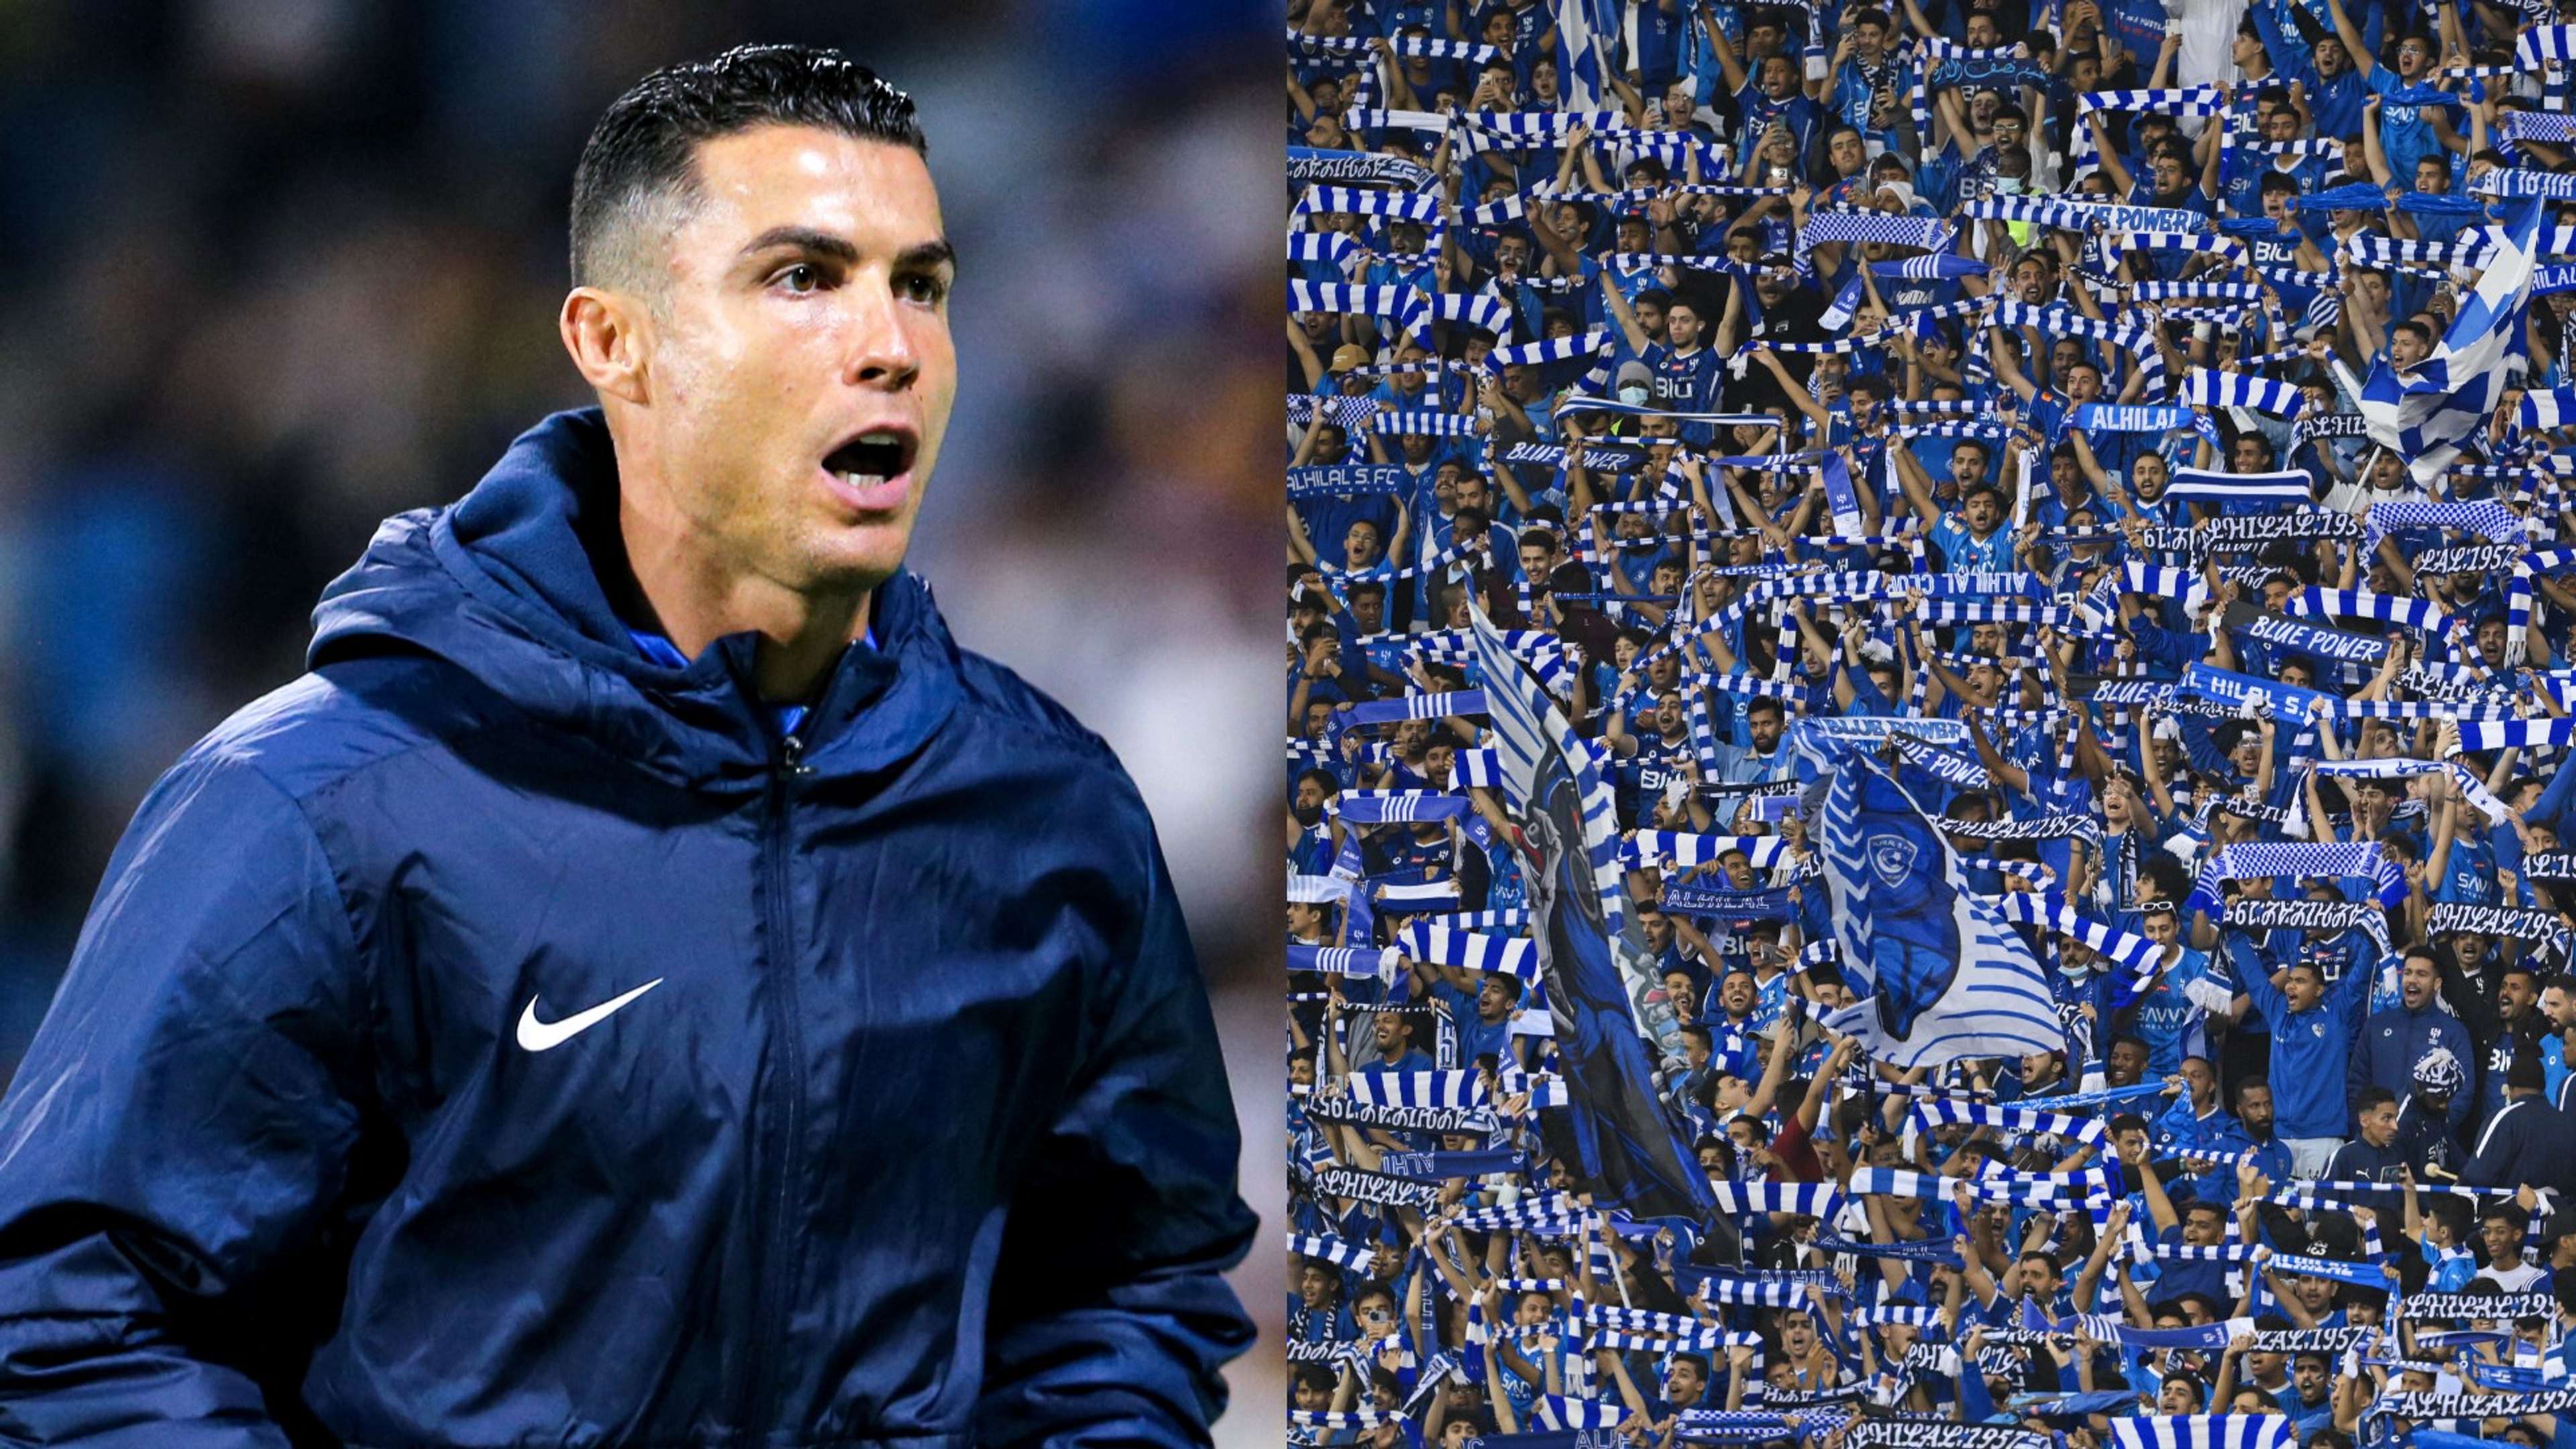 Cristiano Ronaldo - Al Hilal Fans